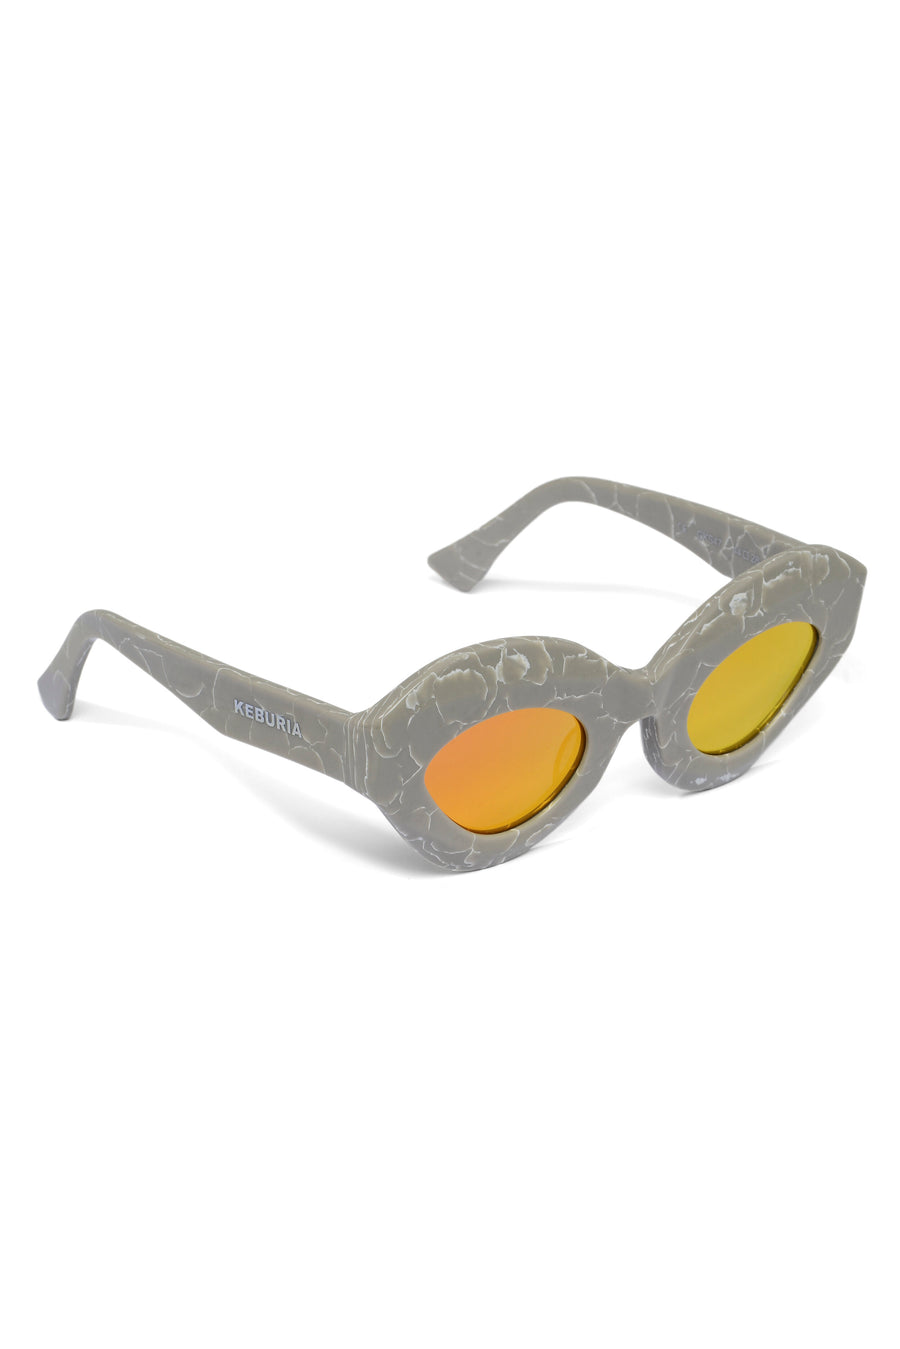 Sunset Rock's Sunglasses